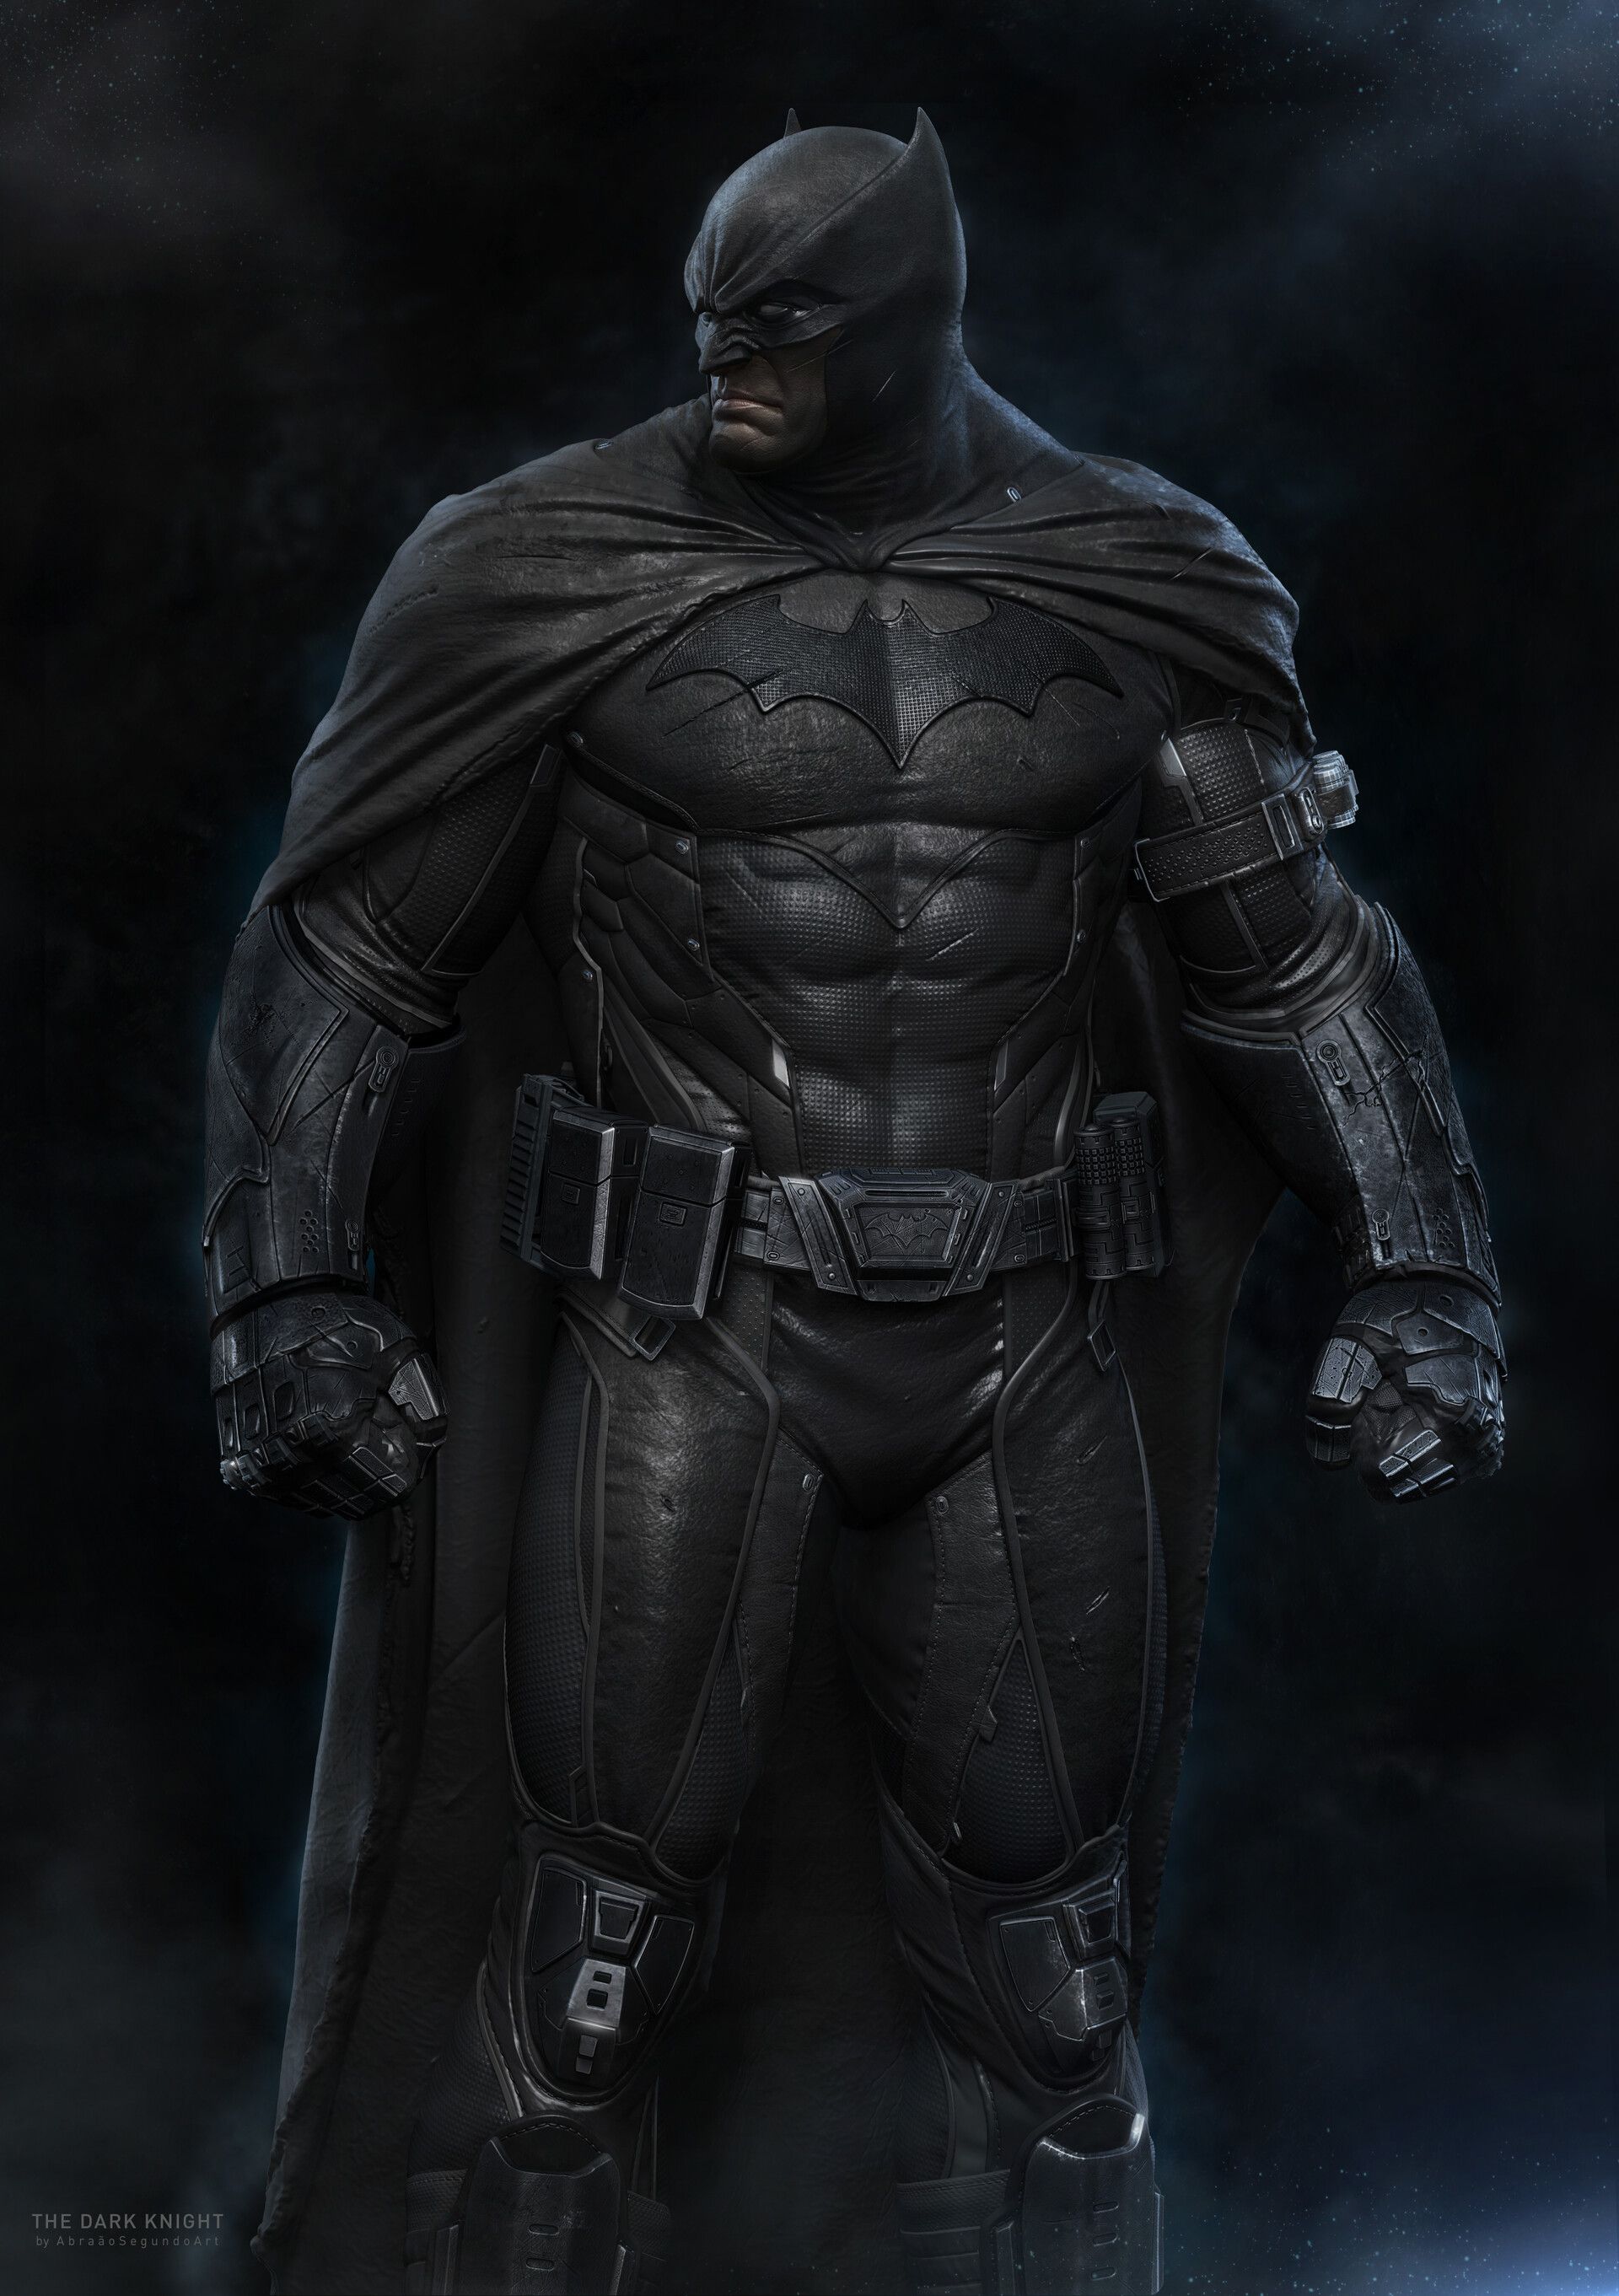 x13 batman phone wallpaper. Thumbnail: The Dark Knight by Abraão